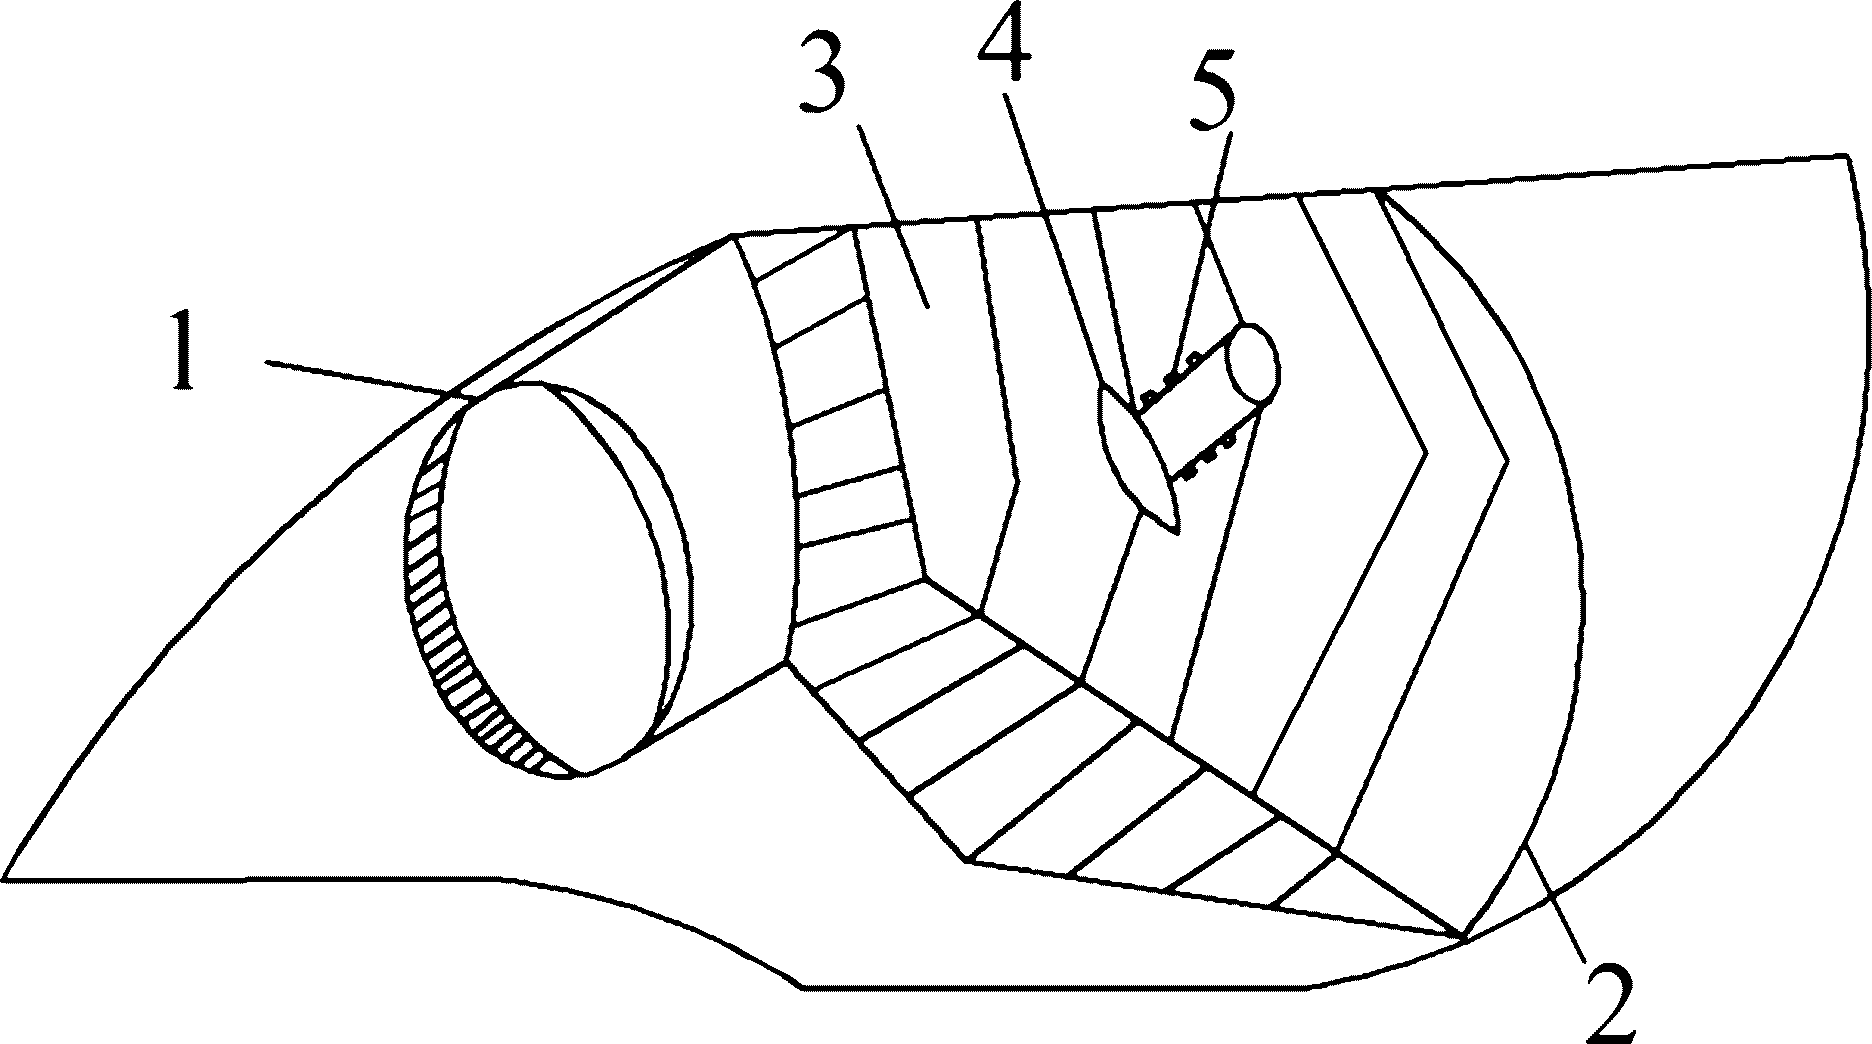 Design method of self-adaptive headlamp based on fly's-eye lens